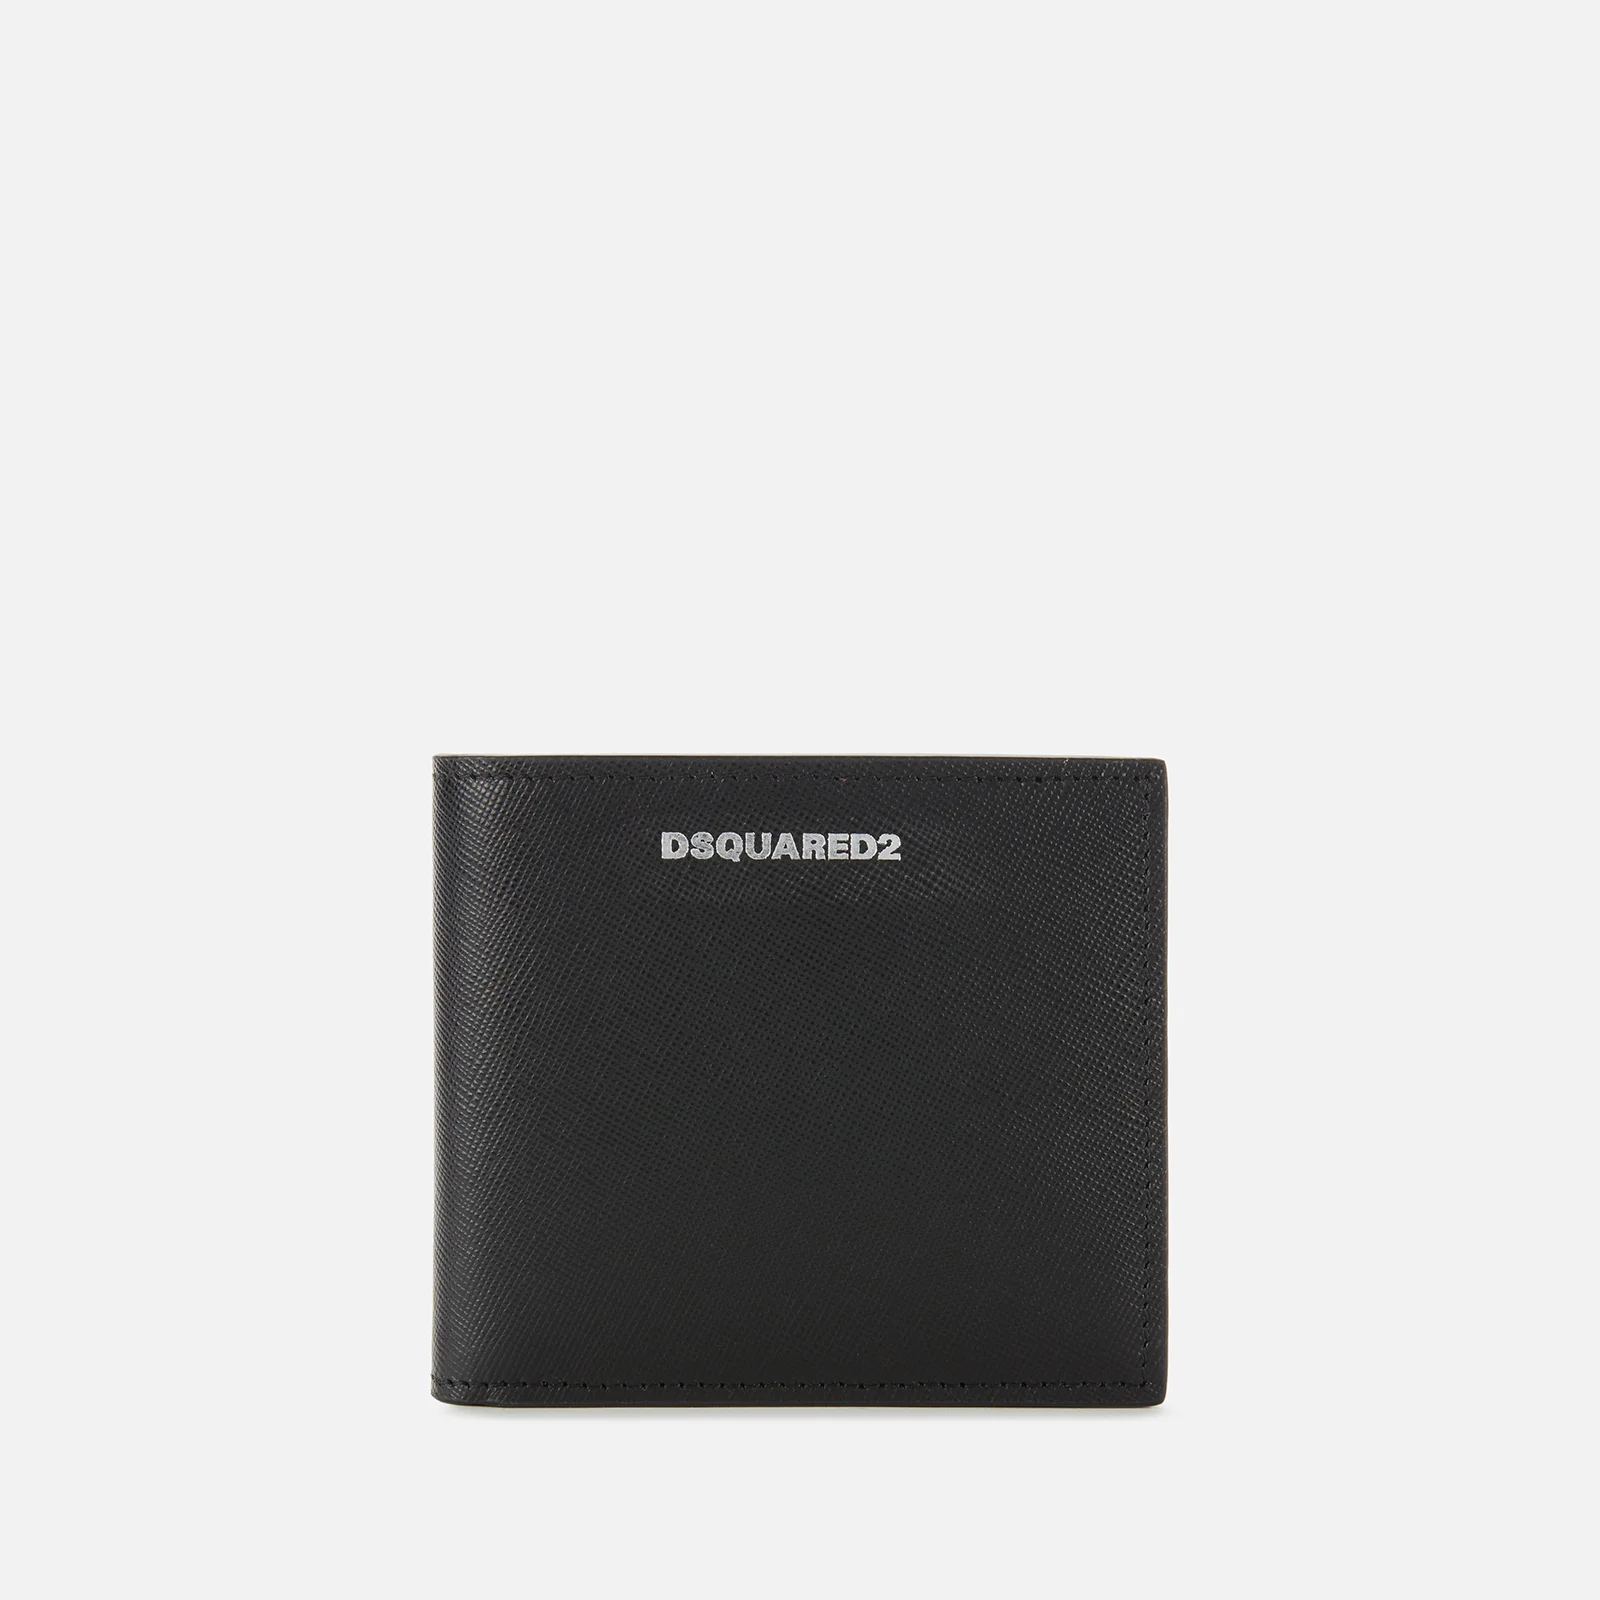 Dsquared2 Men's Dylan Saffiano Leather Bifold Wallet - Black Image 1